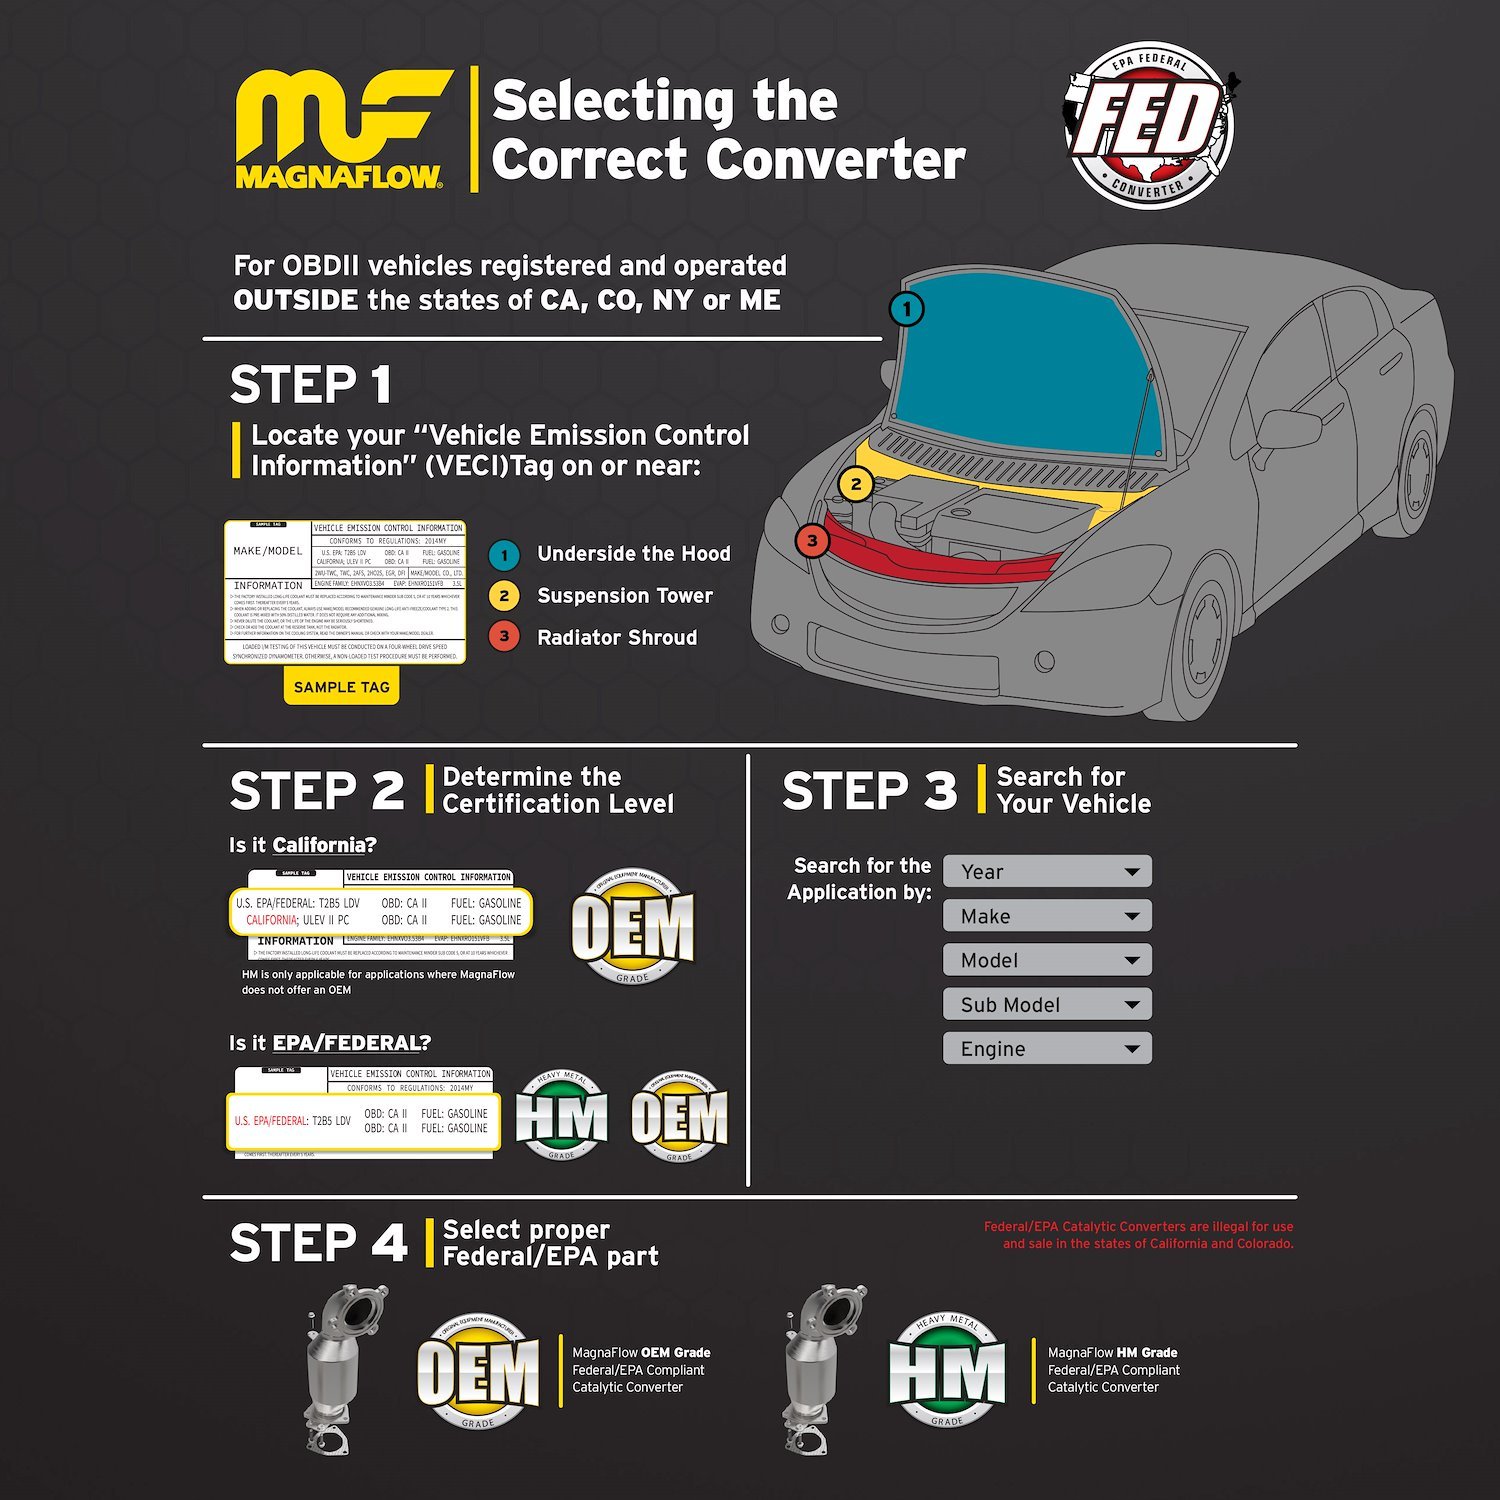 2004-2006 Jeep Wrangler HM Grade Federal / EPA Compliant Direct-Fit Catalytic Converter